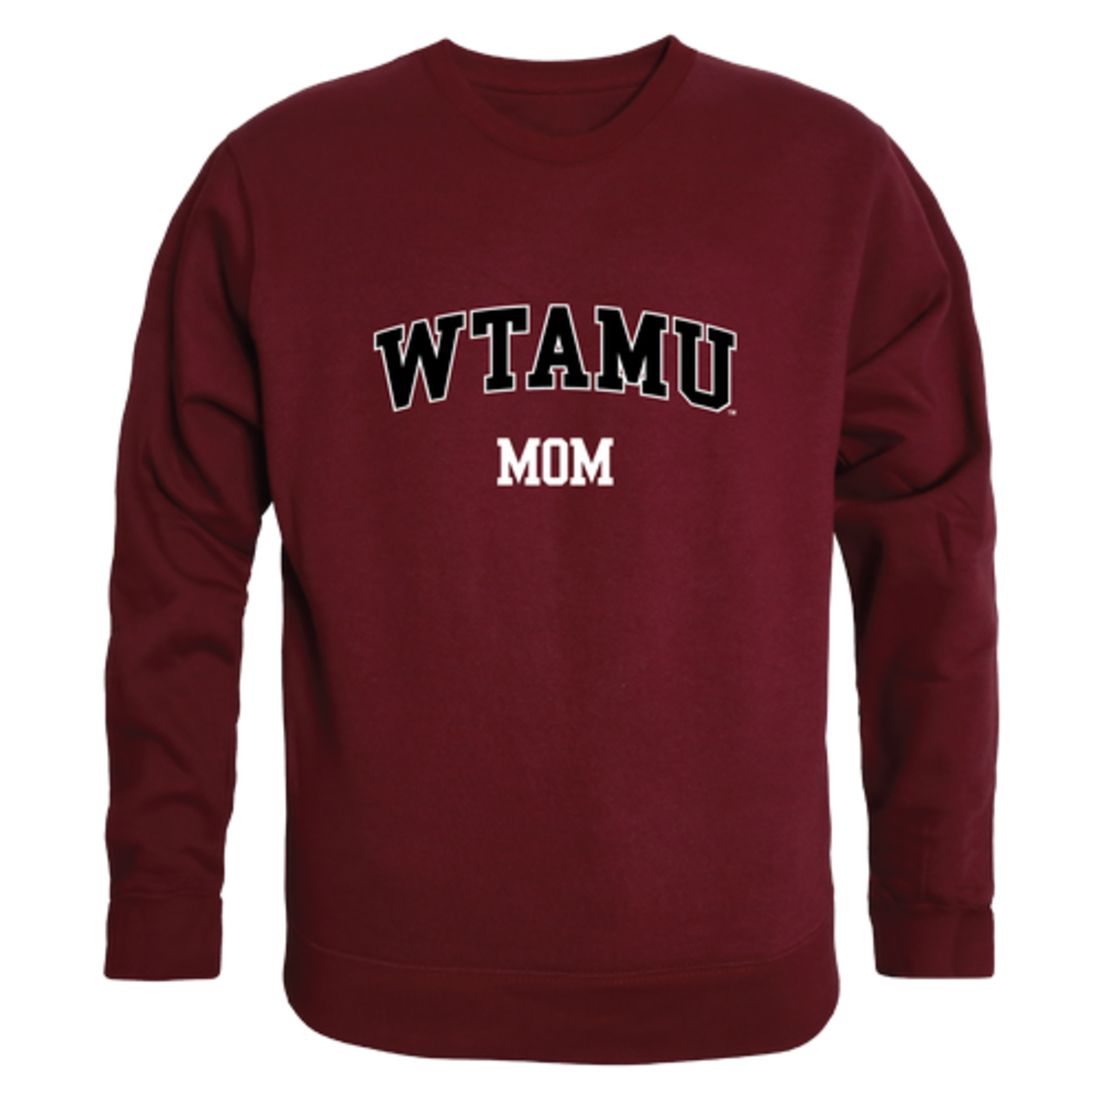 WTAMU West Texas A&M University Buffaloes Mom Fleece Crewneck Pullover Sweatshirt Heather Grey Small-Campus-Wardrobe